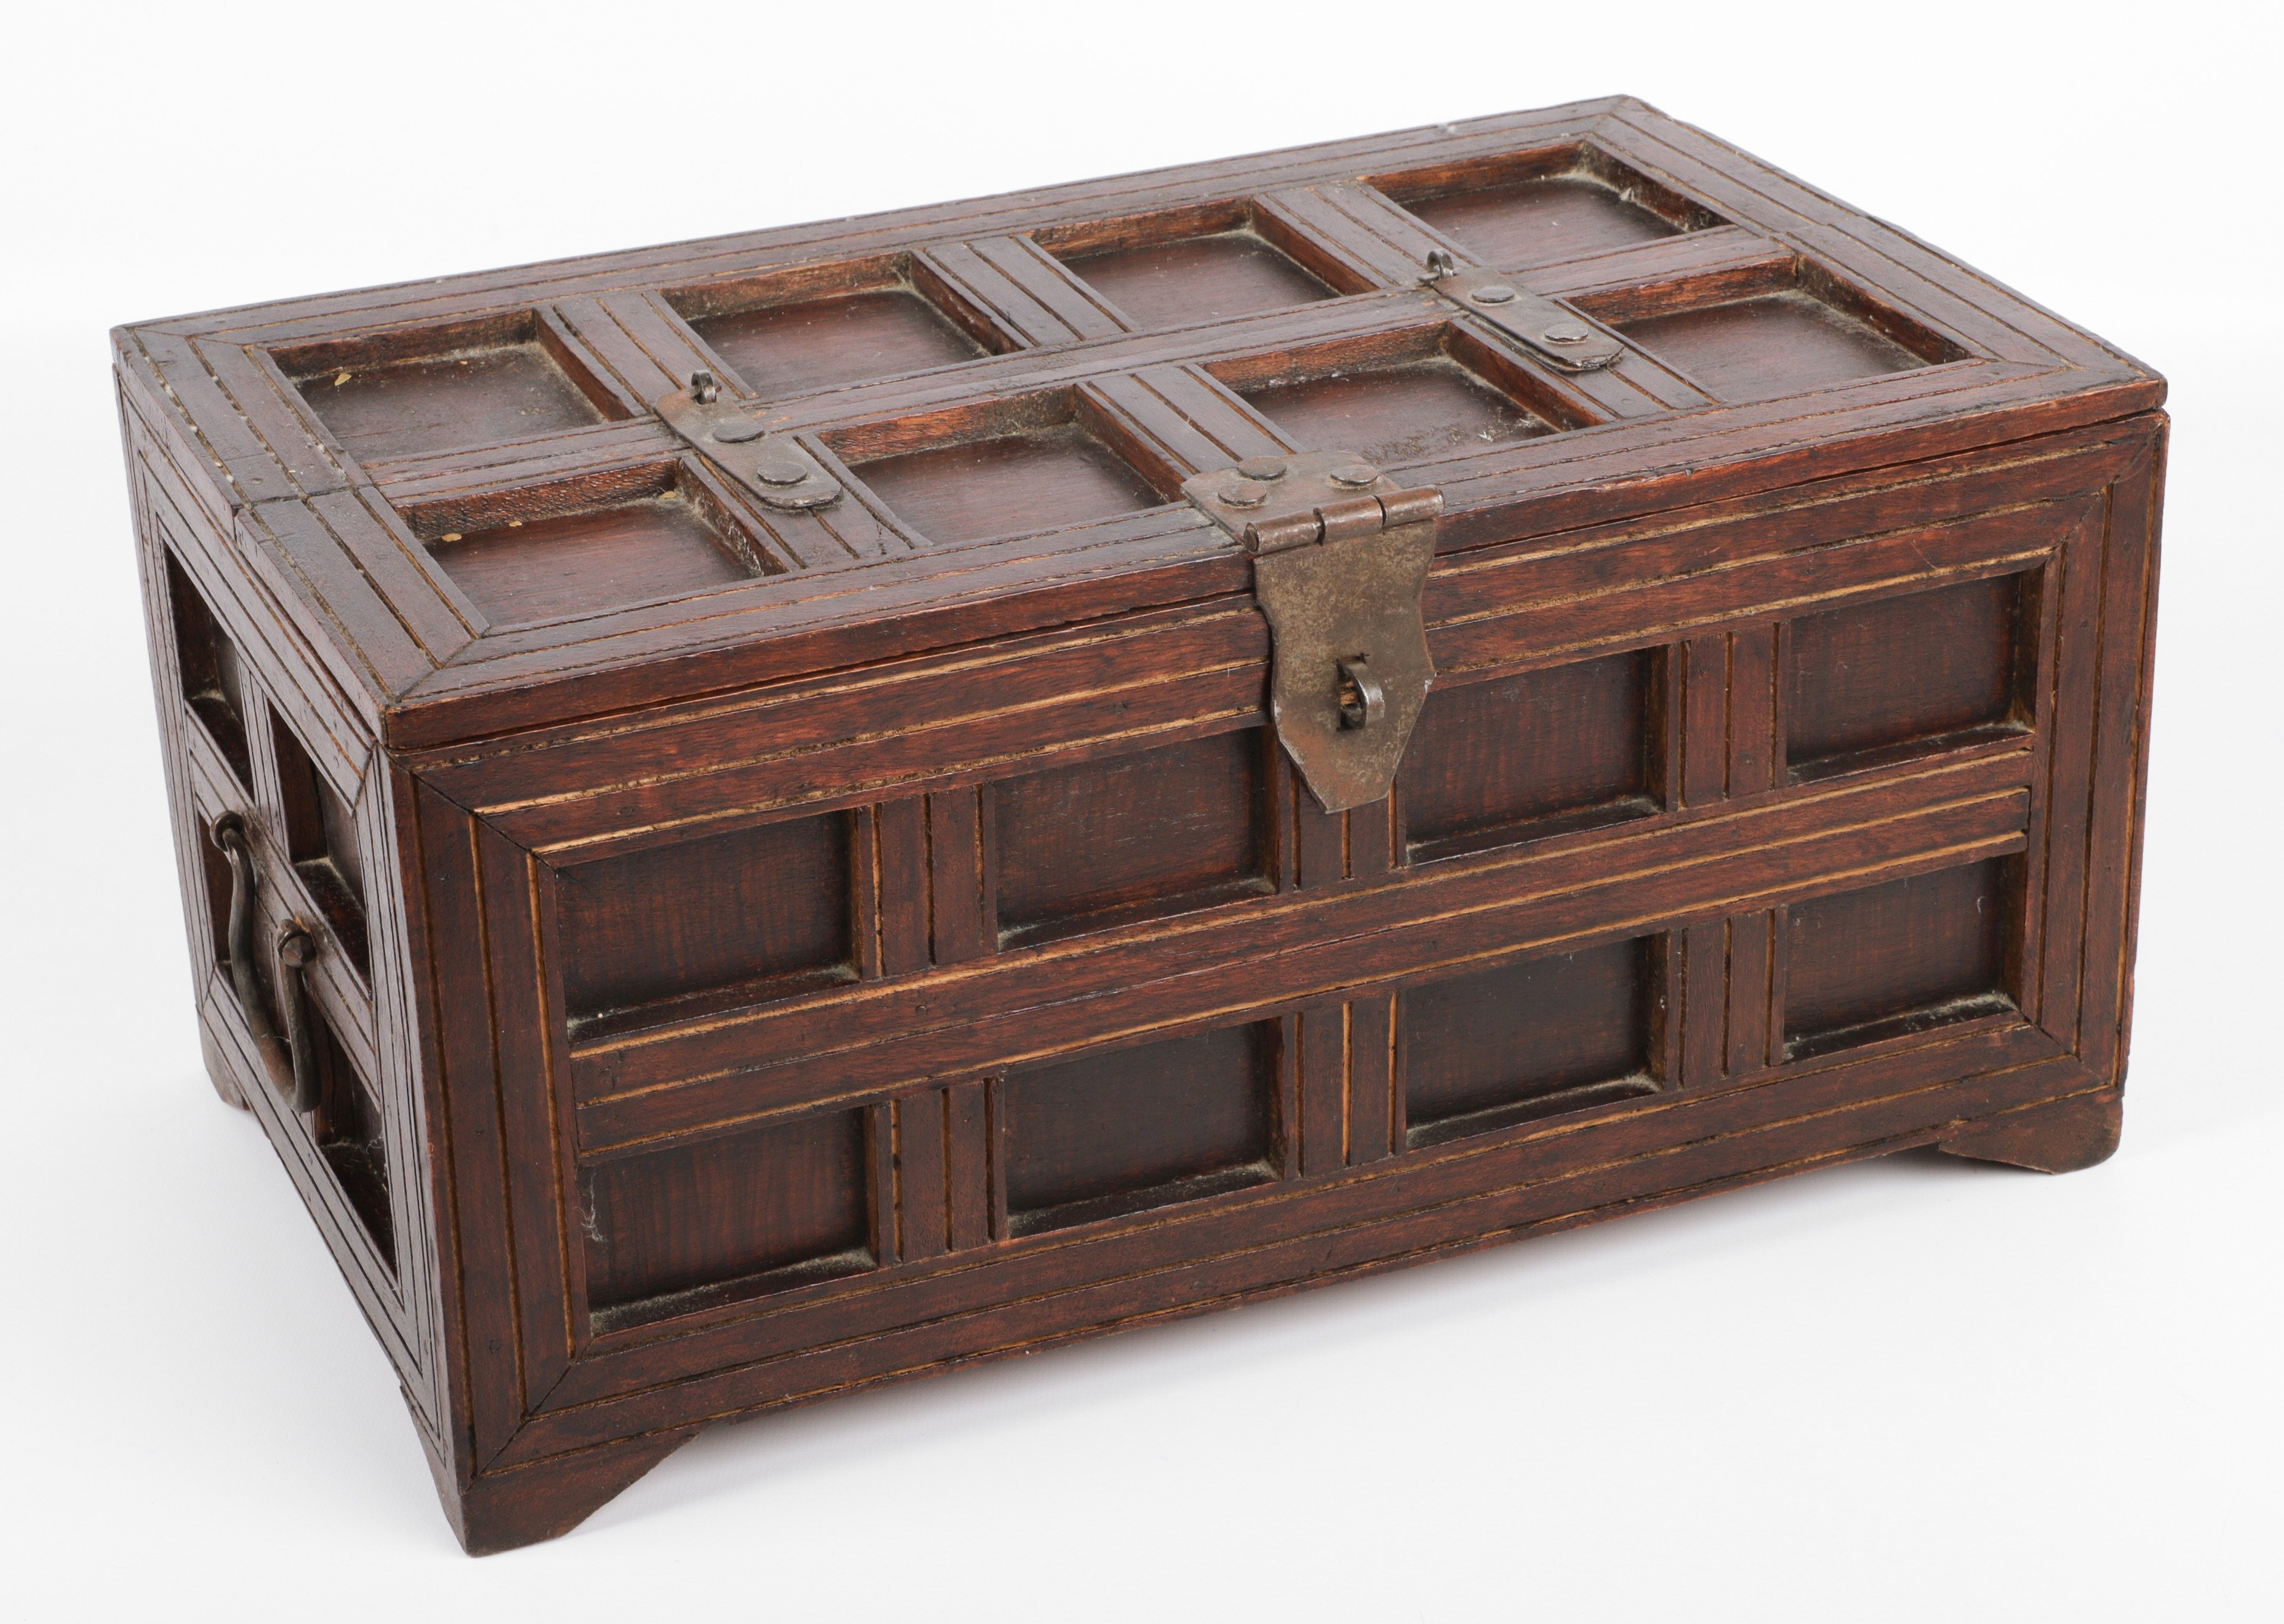 Chinese wood storage box, brass